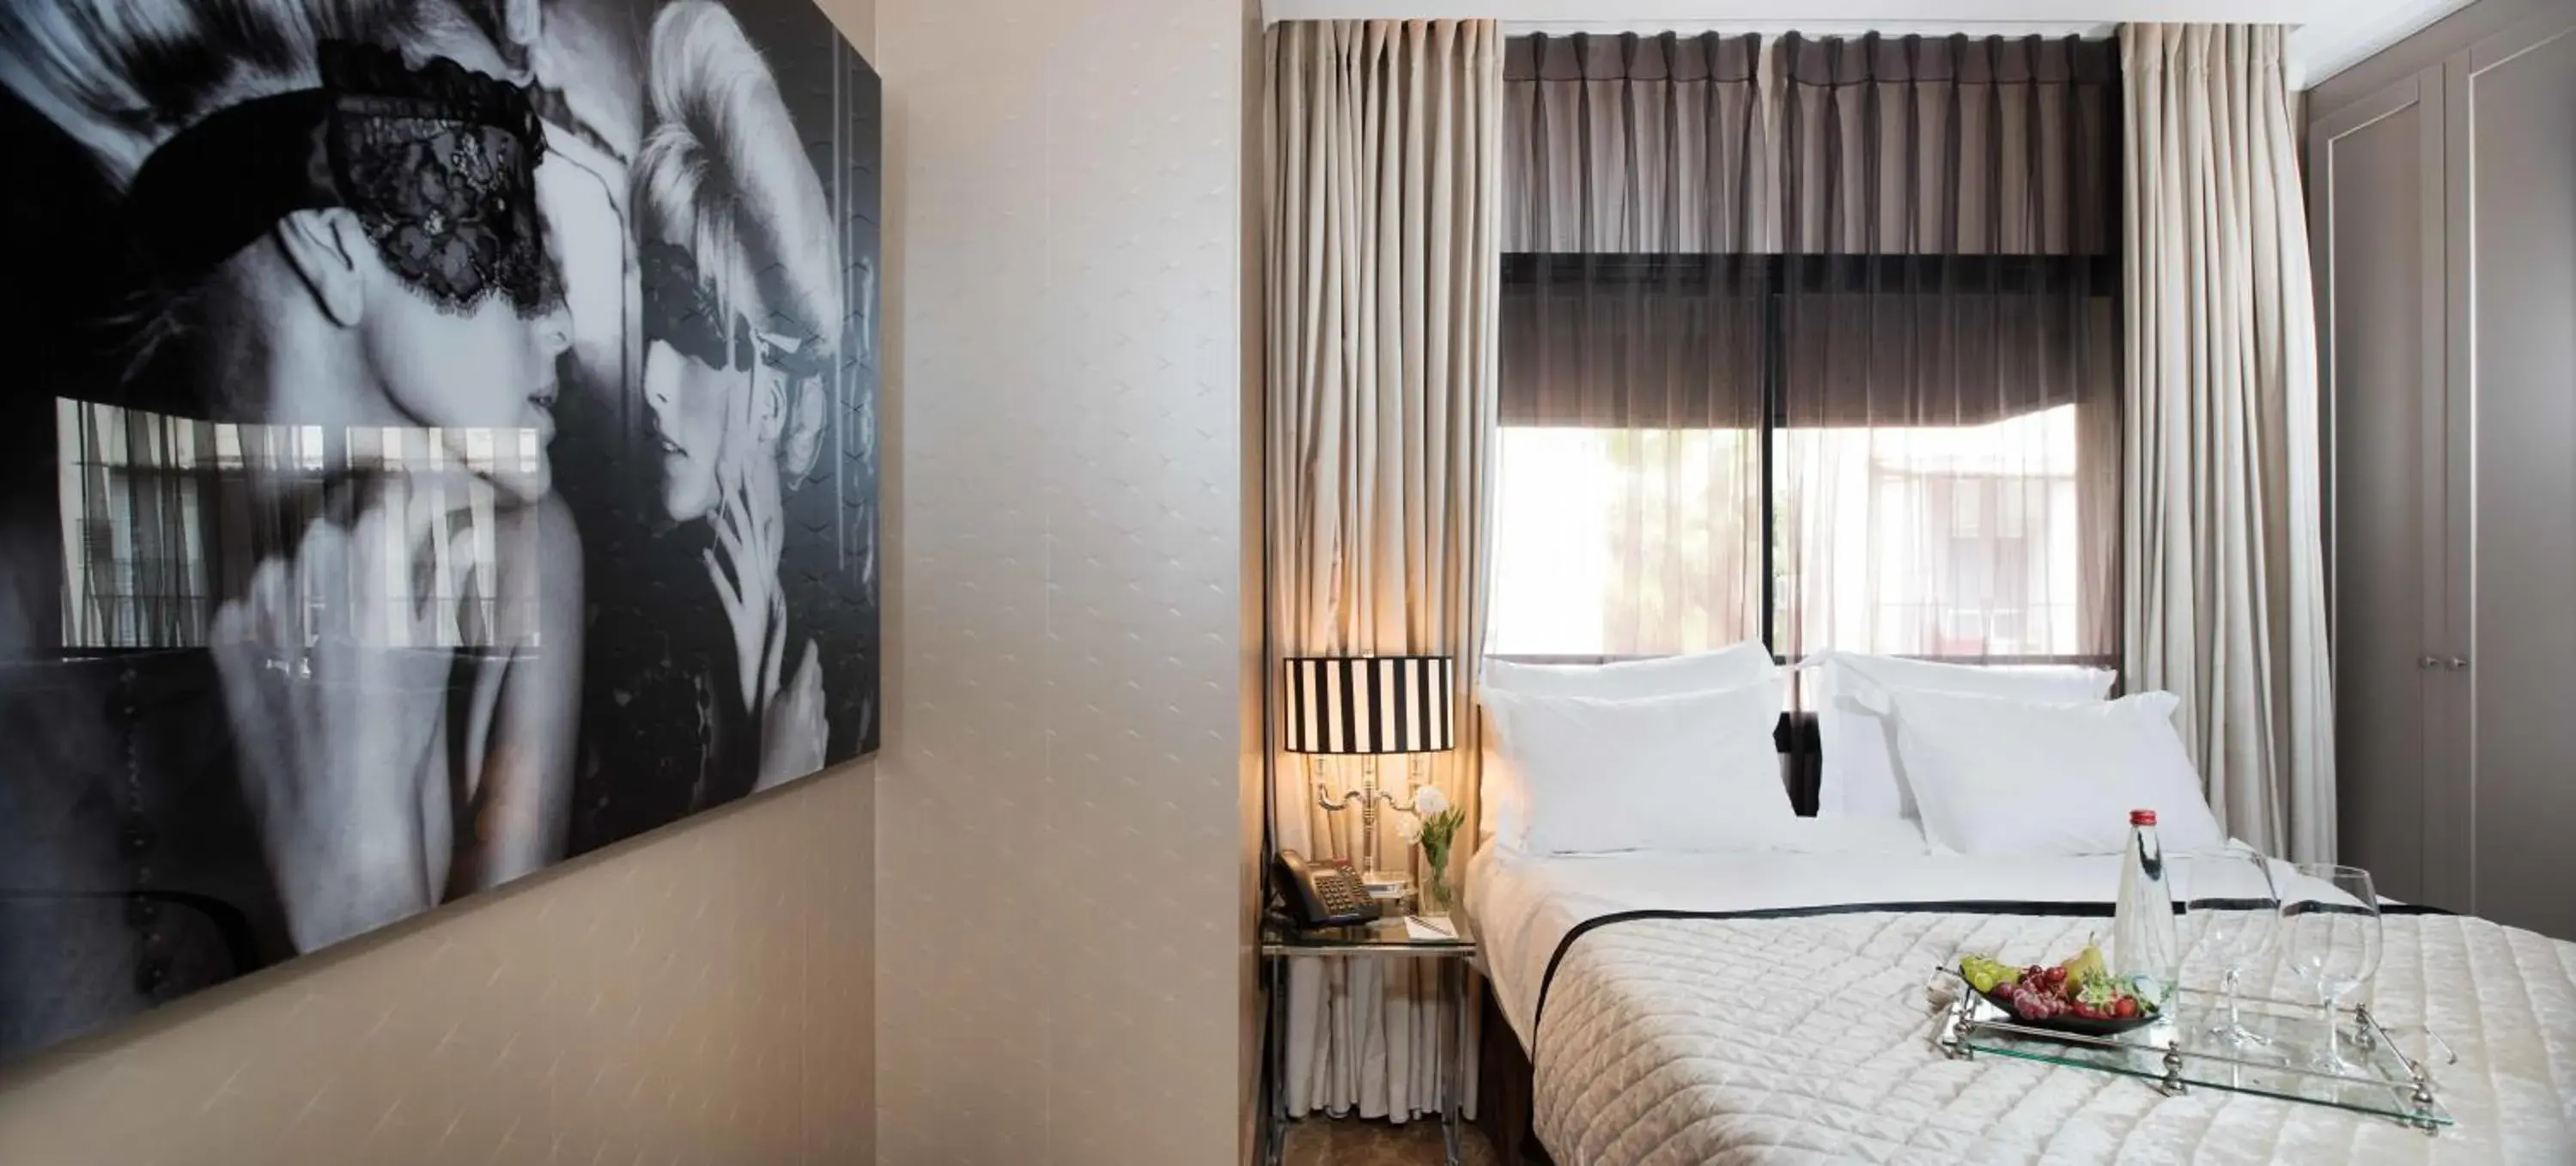 Classic Double Room - single occupancy in Hotel B Berdichevsky